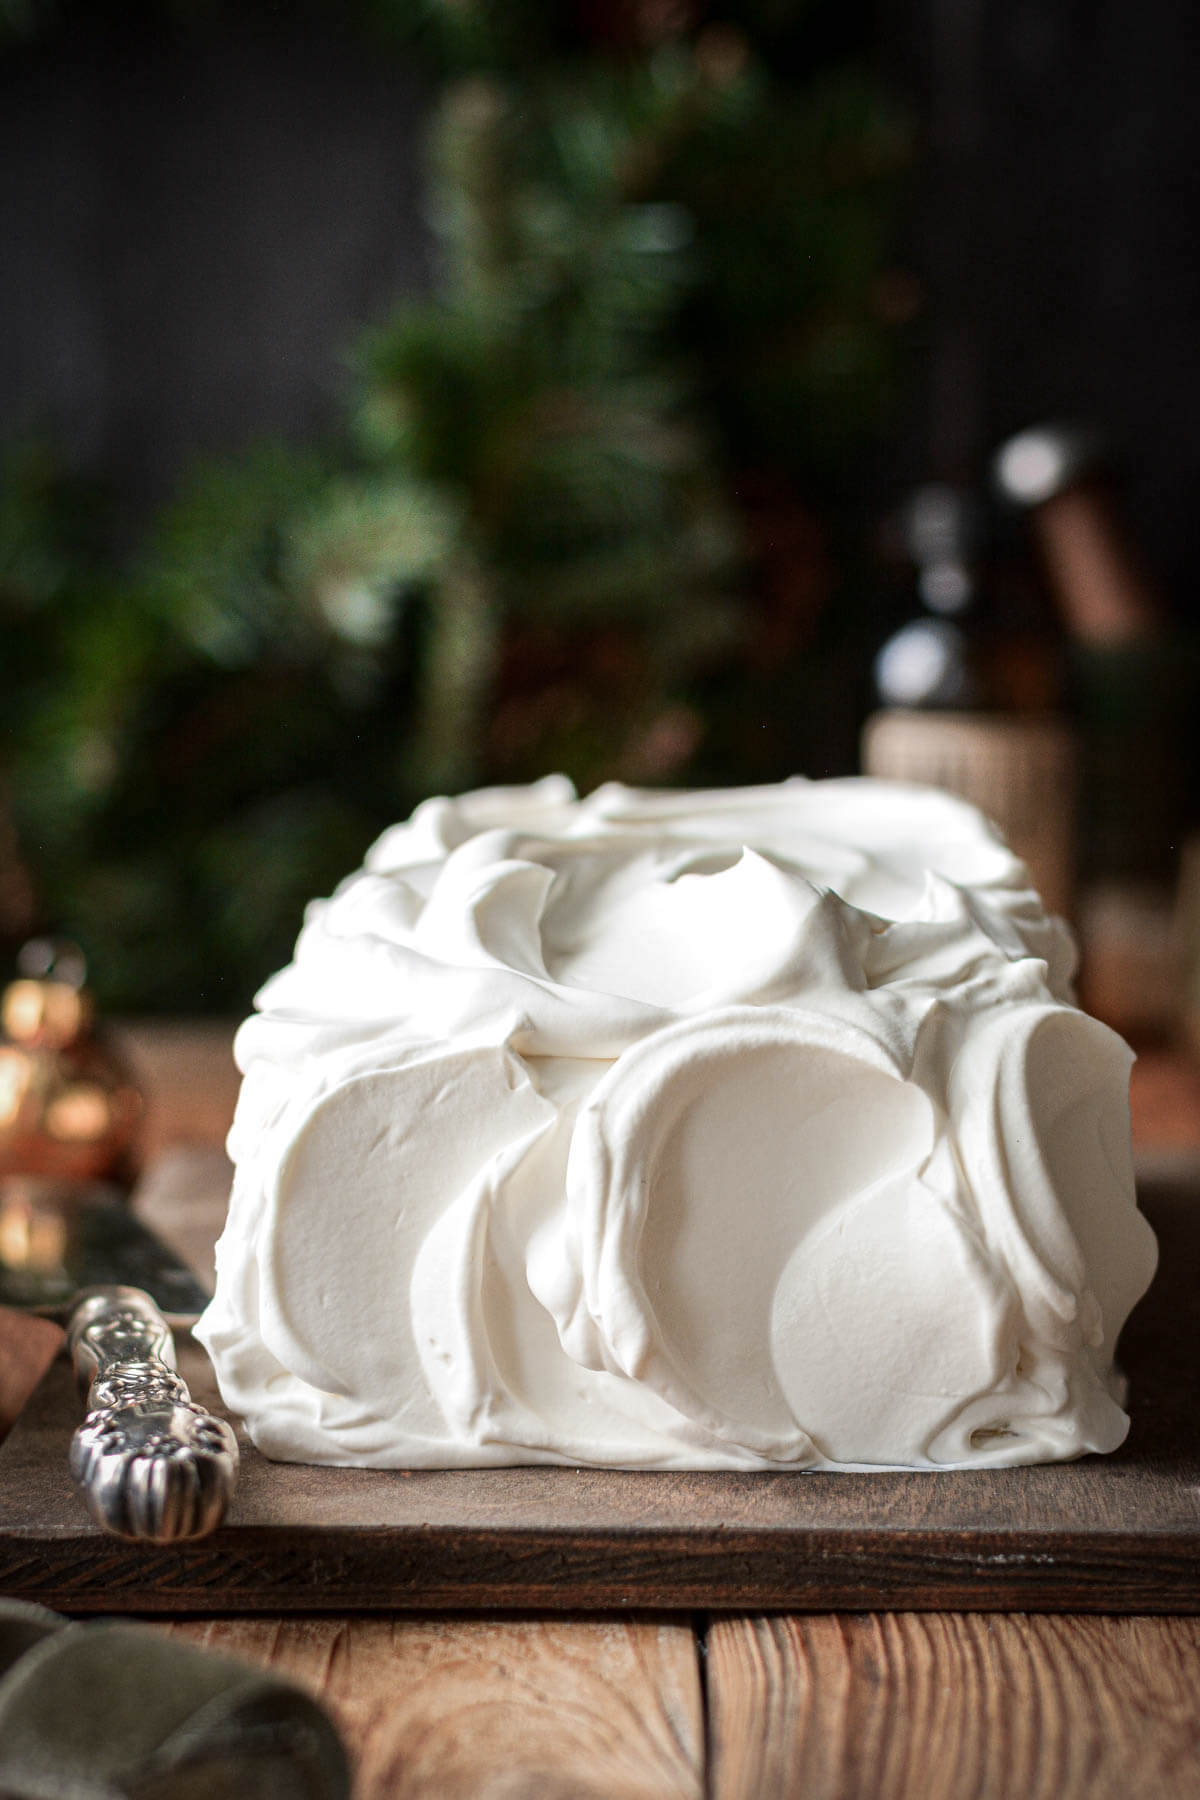 Whipped cream covering an eggnog icebox cake.